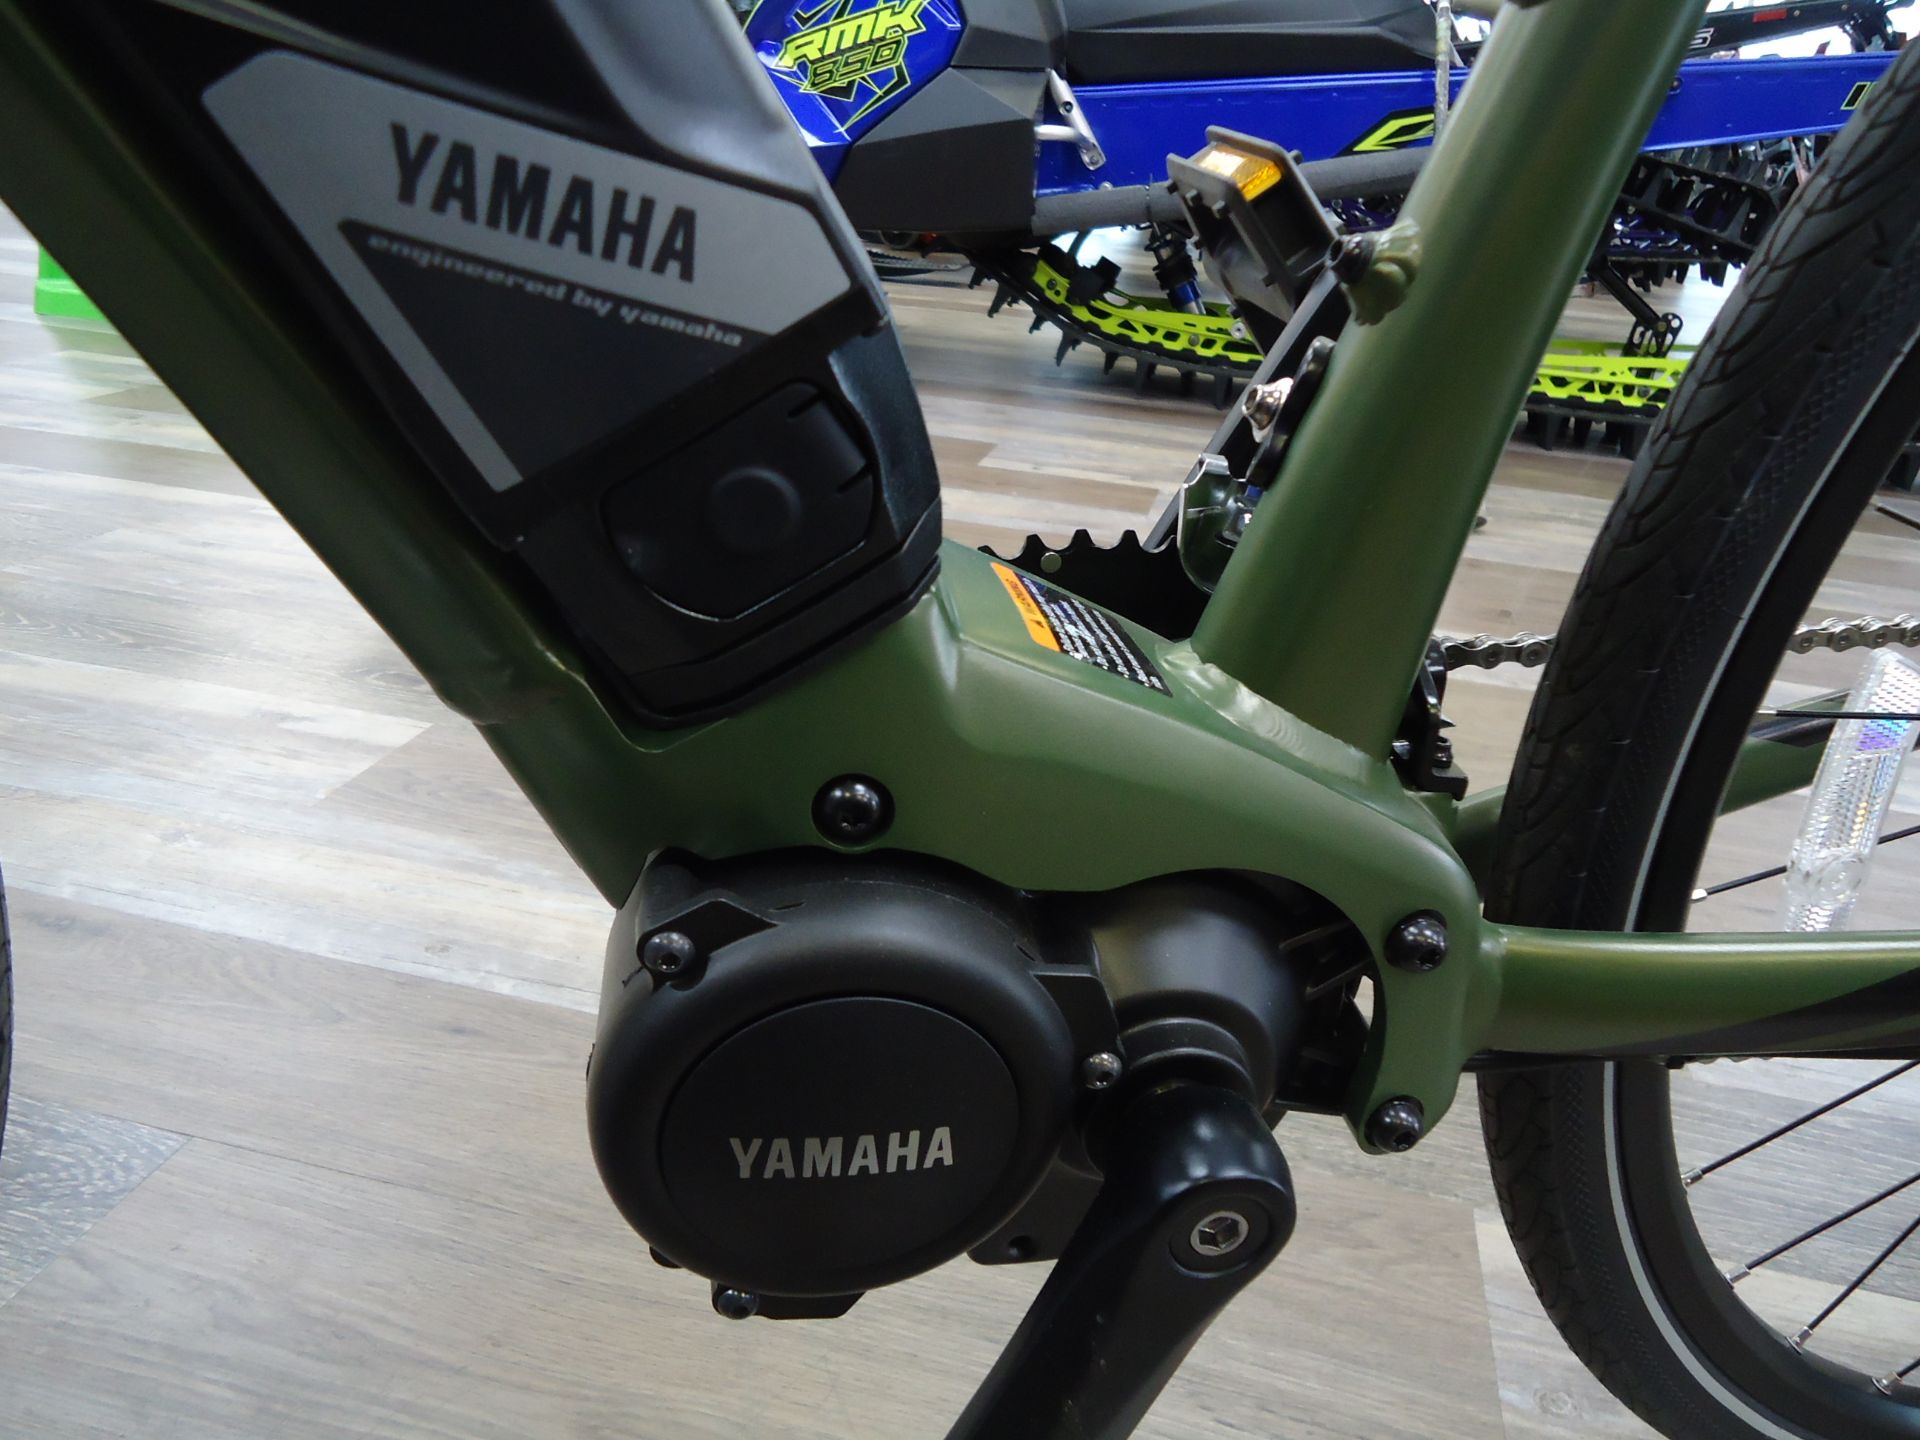 2022 Yamaha CrossCore - Large in Denver, Colorado - Photo 12